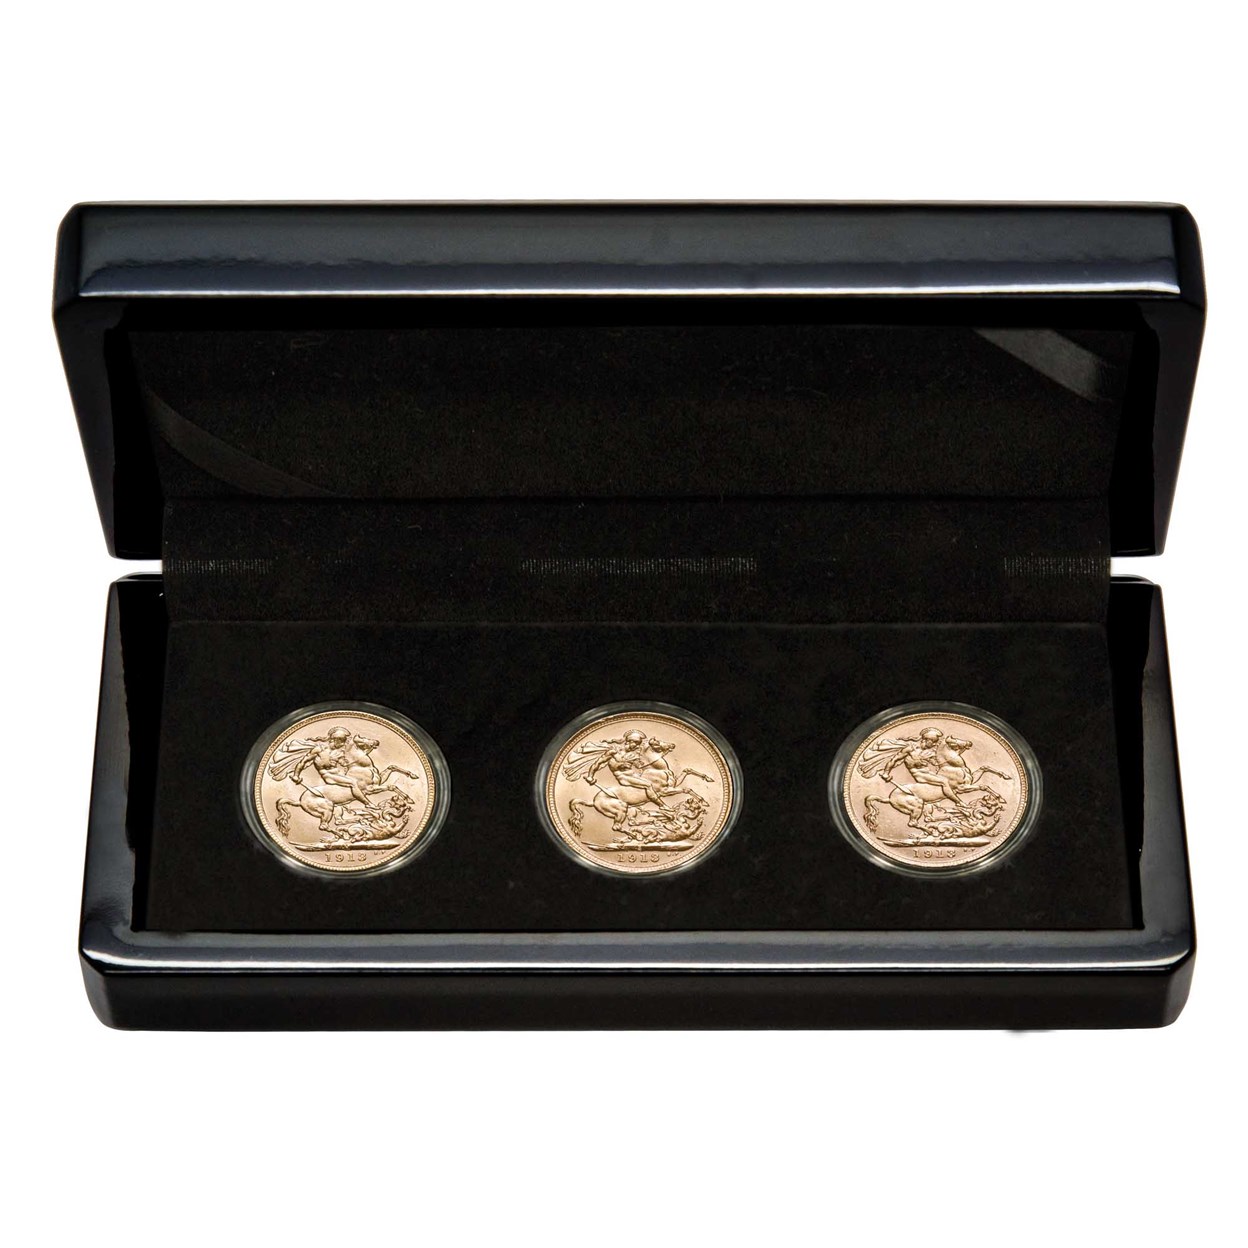 07 1913 gold sovereign mintmark trio InCaseOpen